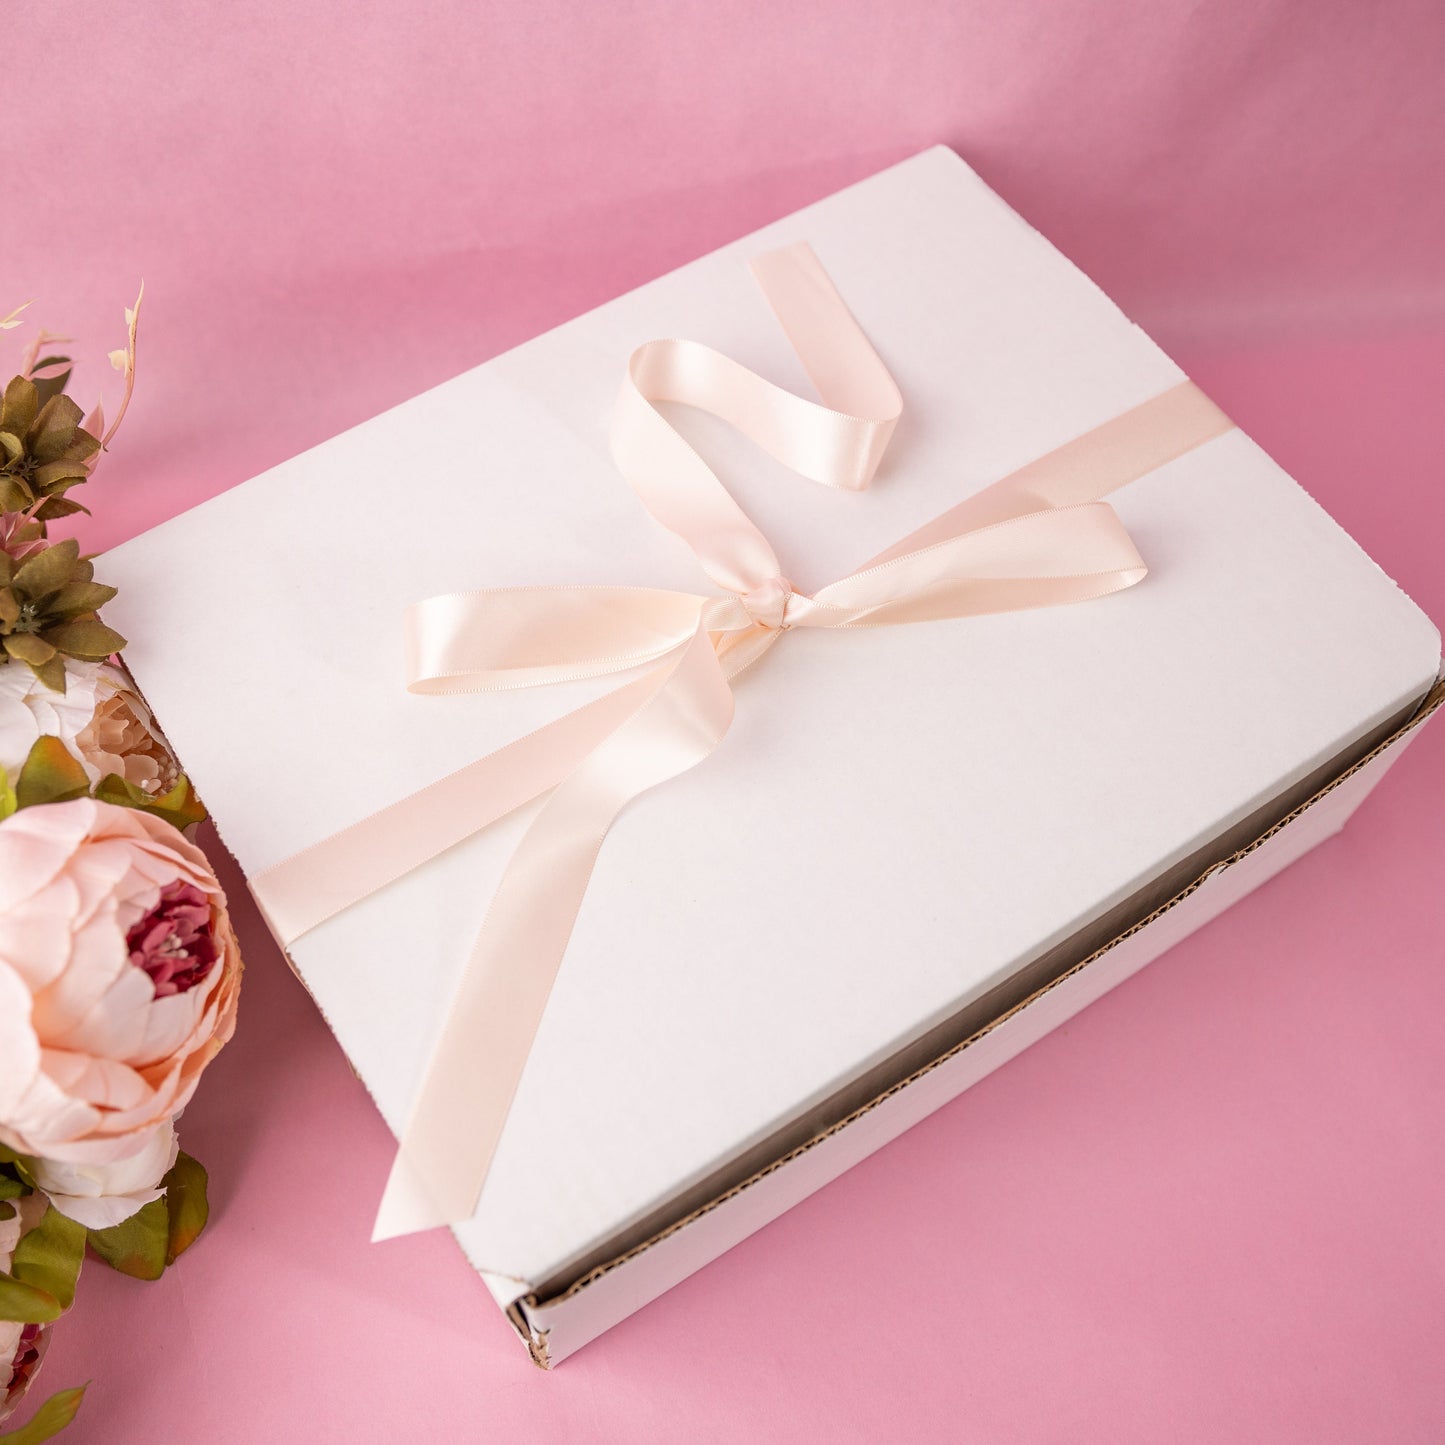 Birthday Succulent Gift Box